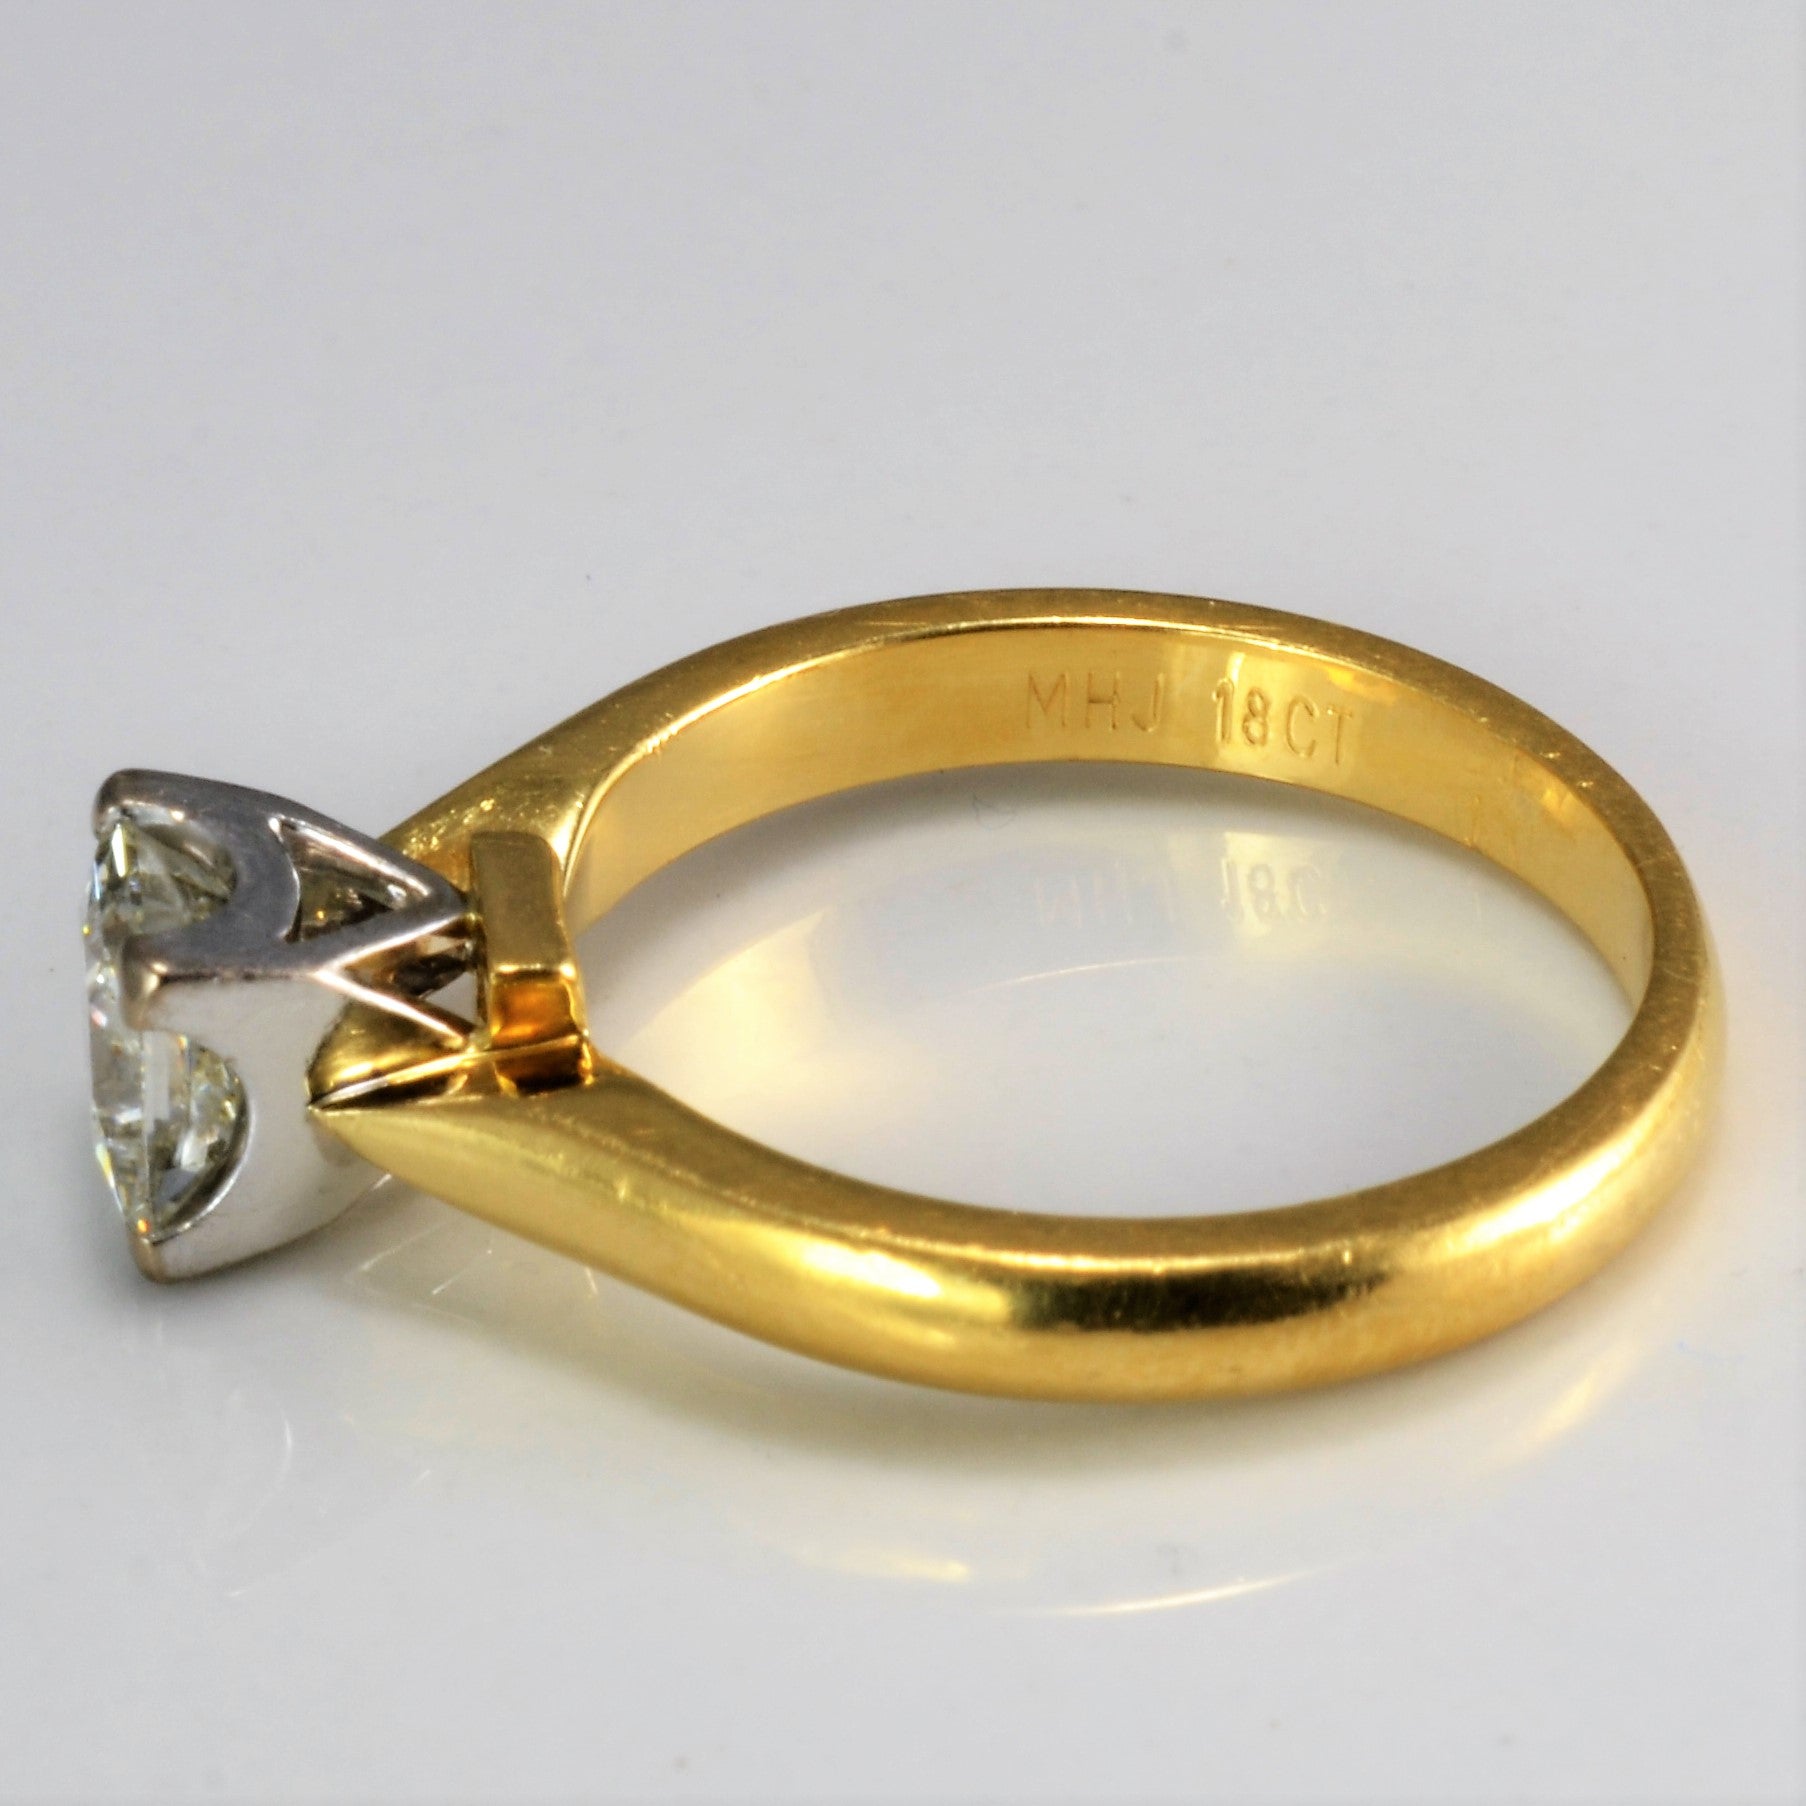 High Set Solitaire Diamond Engagement Ring | 1.00 ct, SZ 7 |